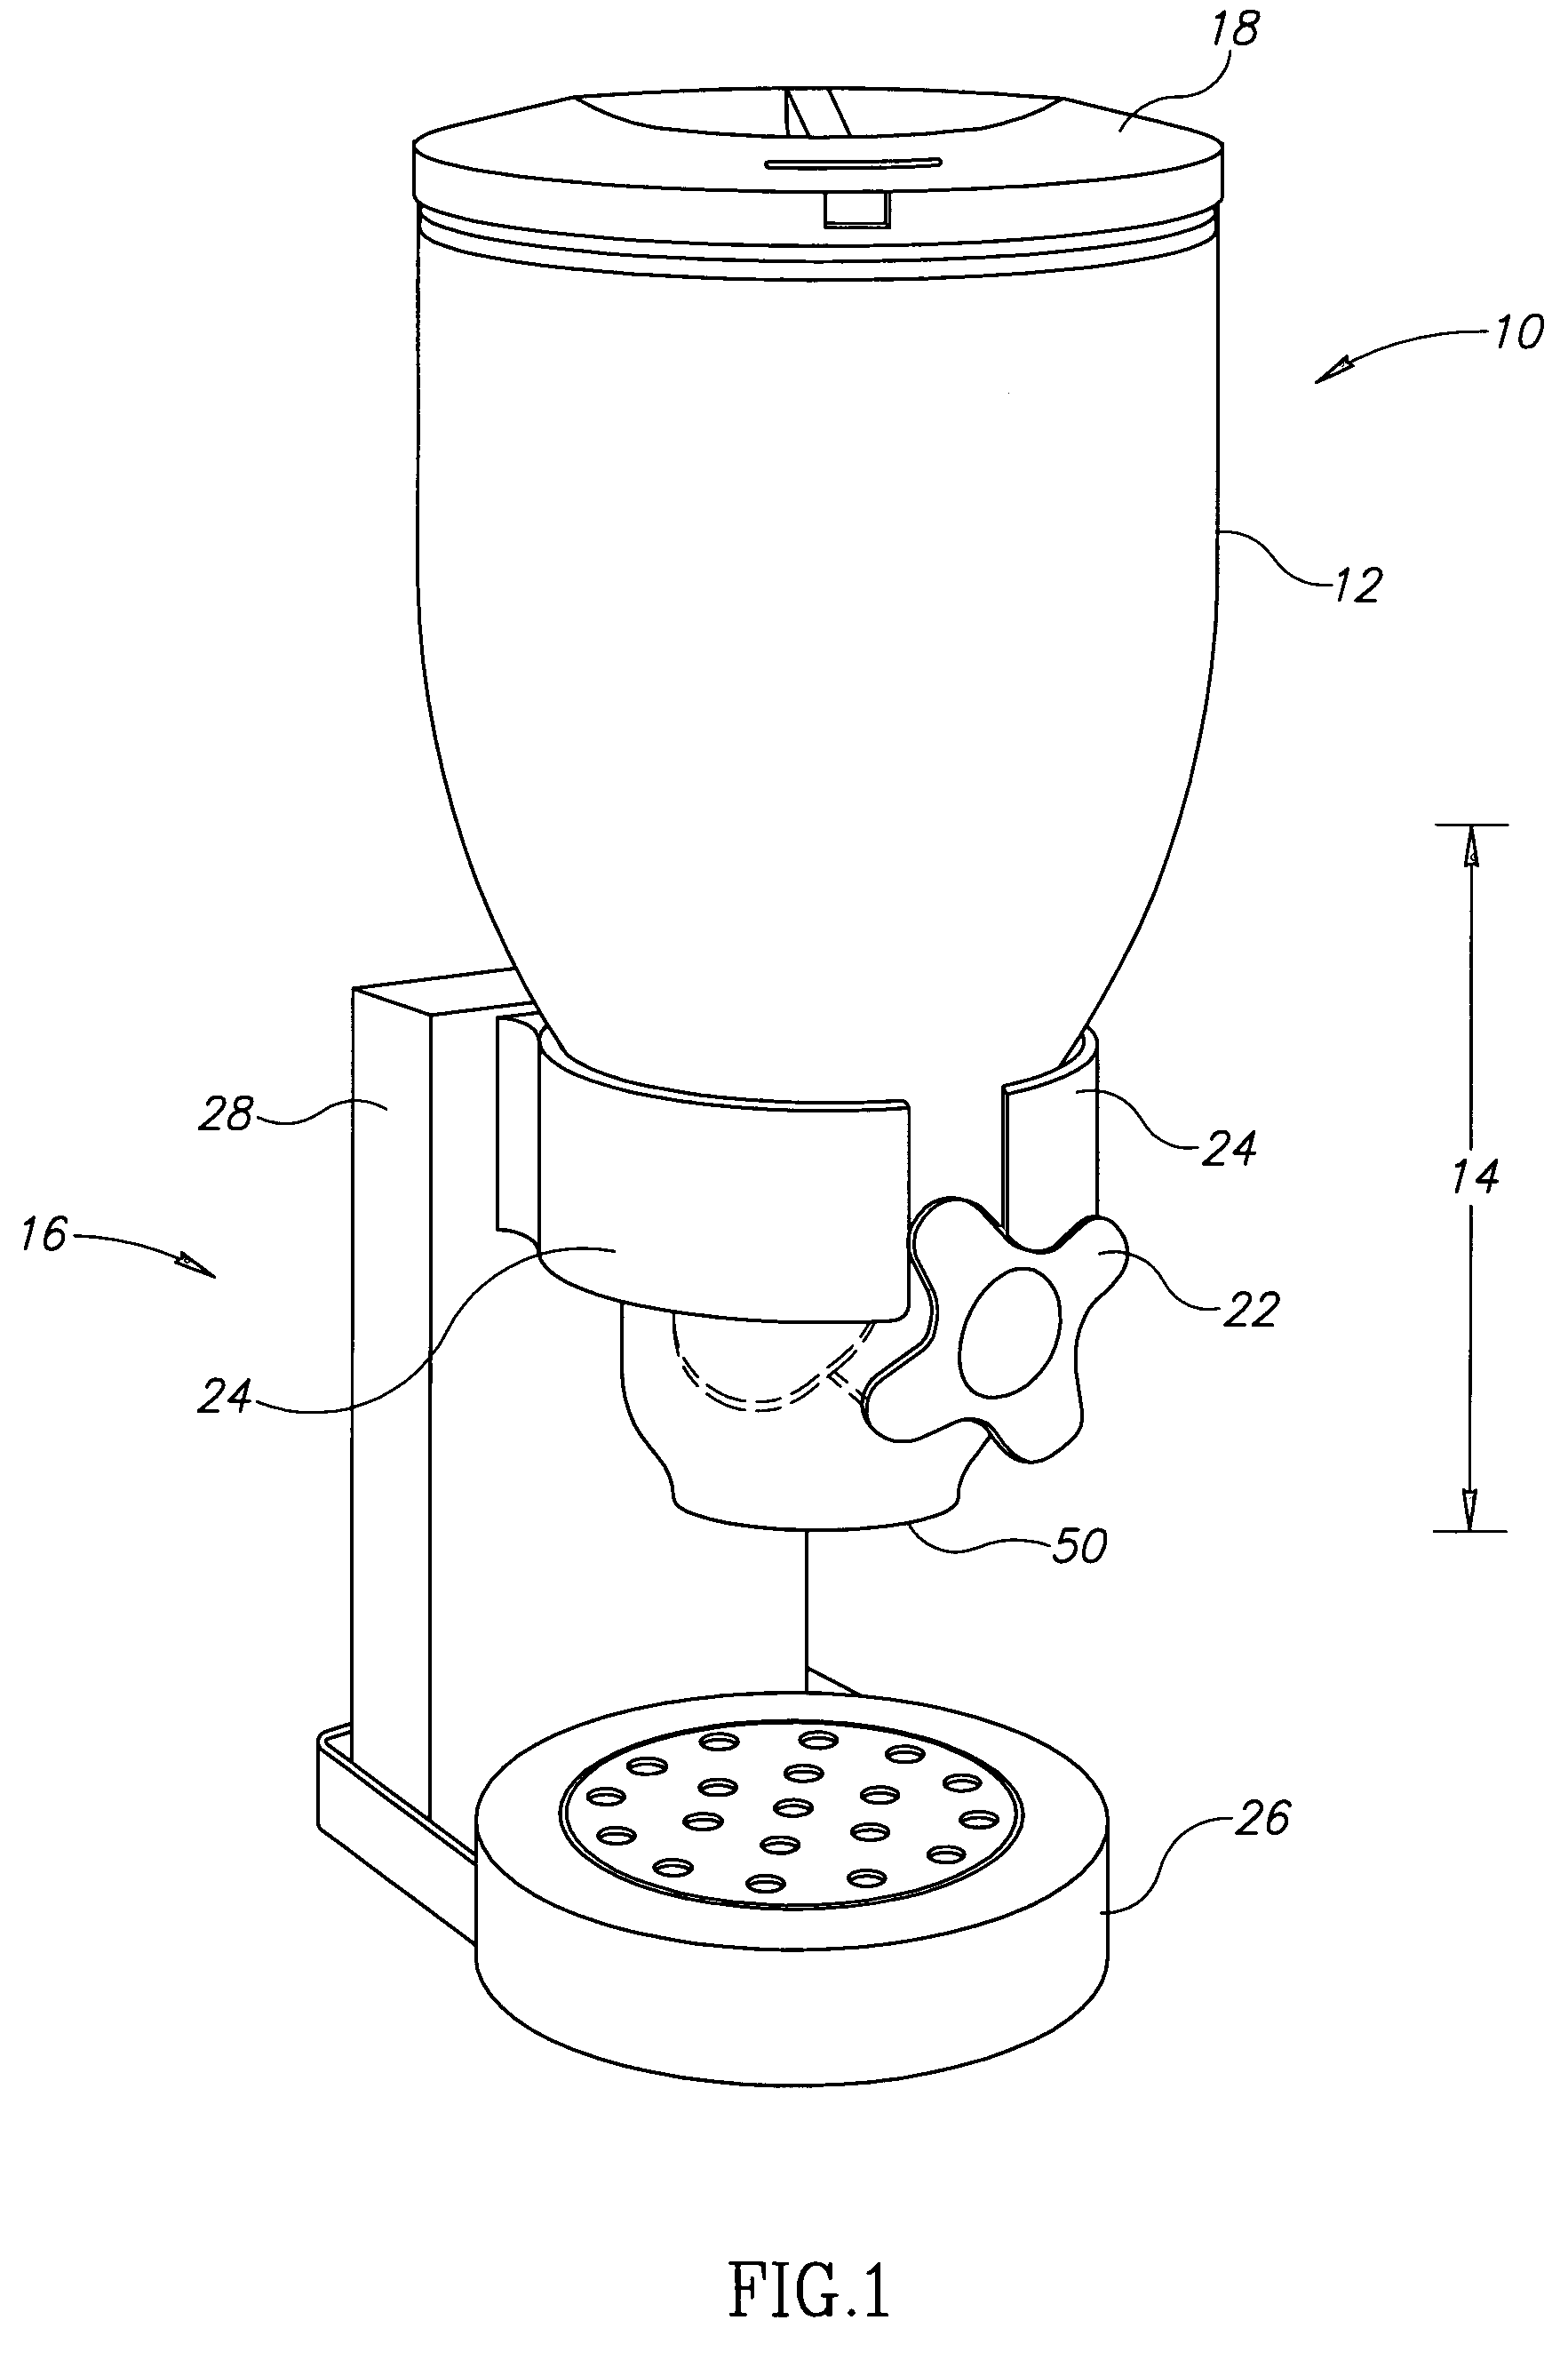 Granular product dispensing system